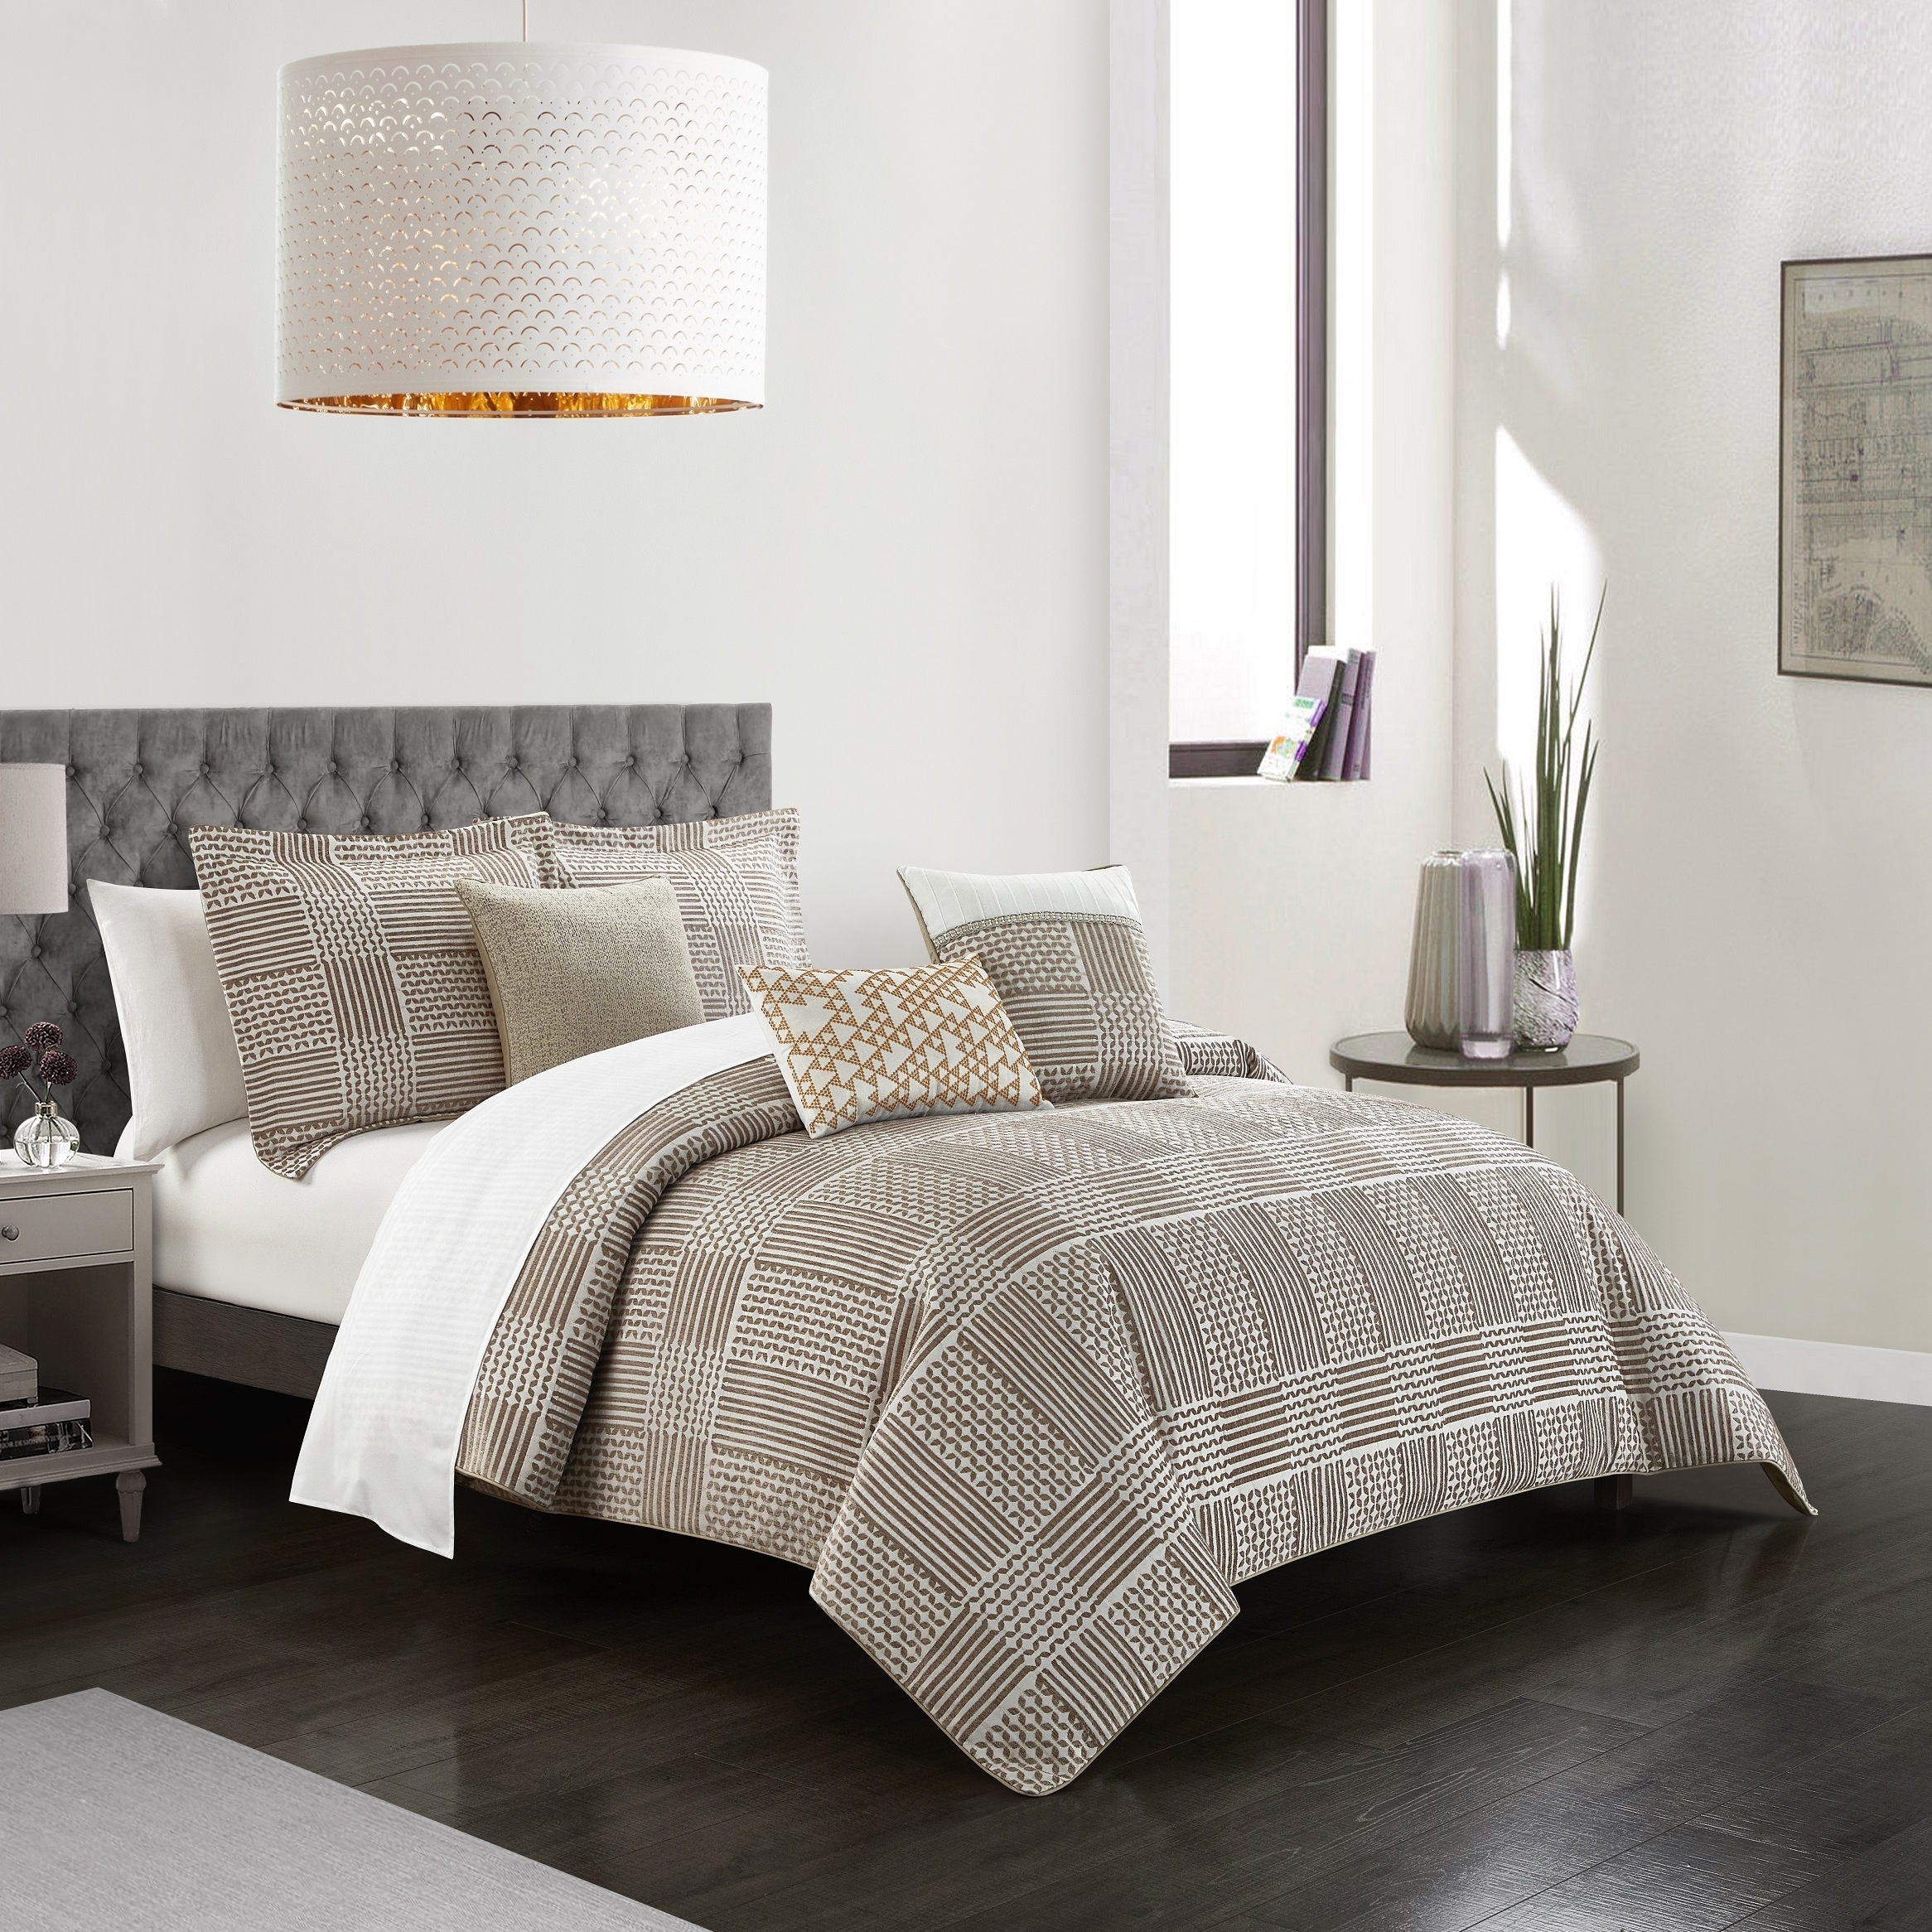 Odhi 6 Or 10 Piece Comforter Set Chenille Geometric Pattern Design Bedding - Beige With Sheet Set, King (10 Piece)